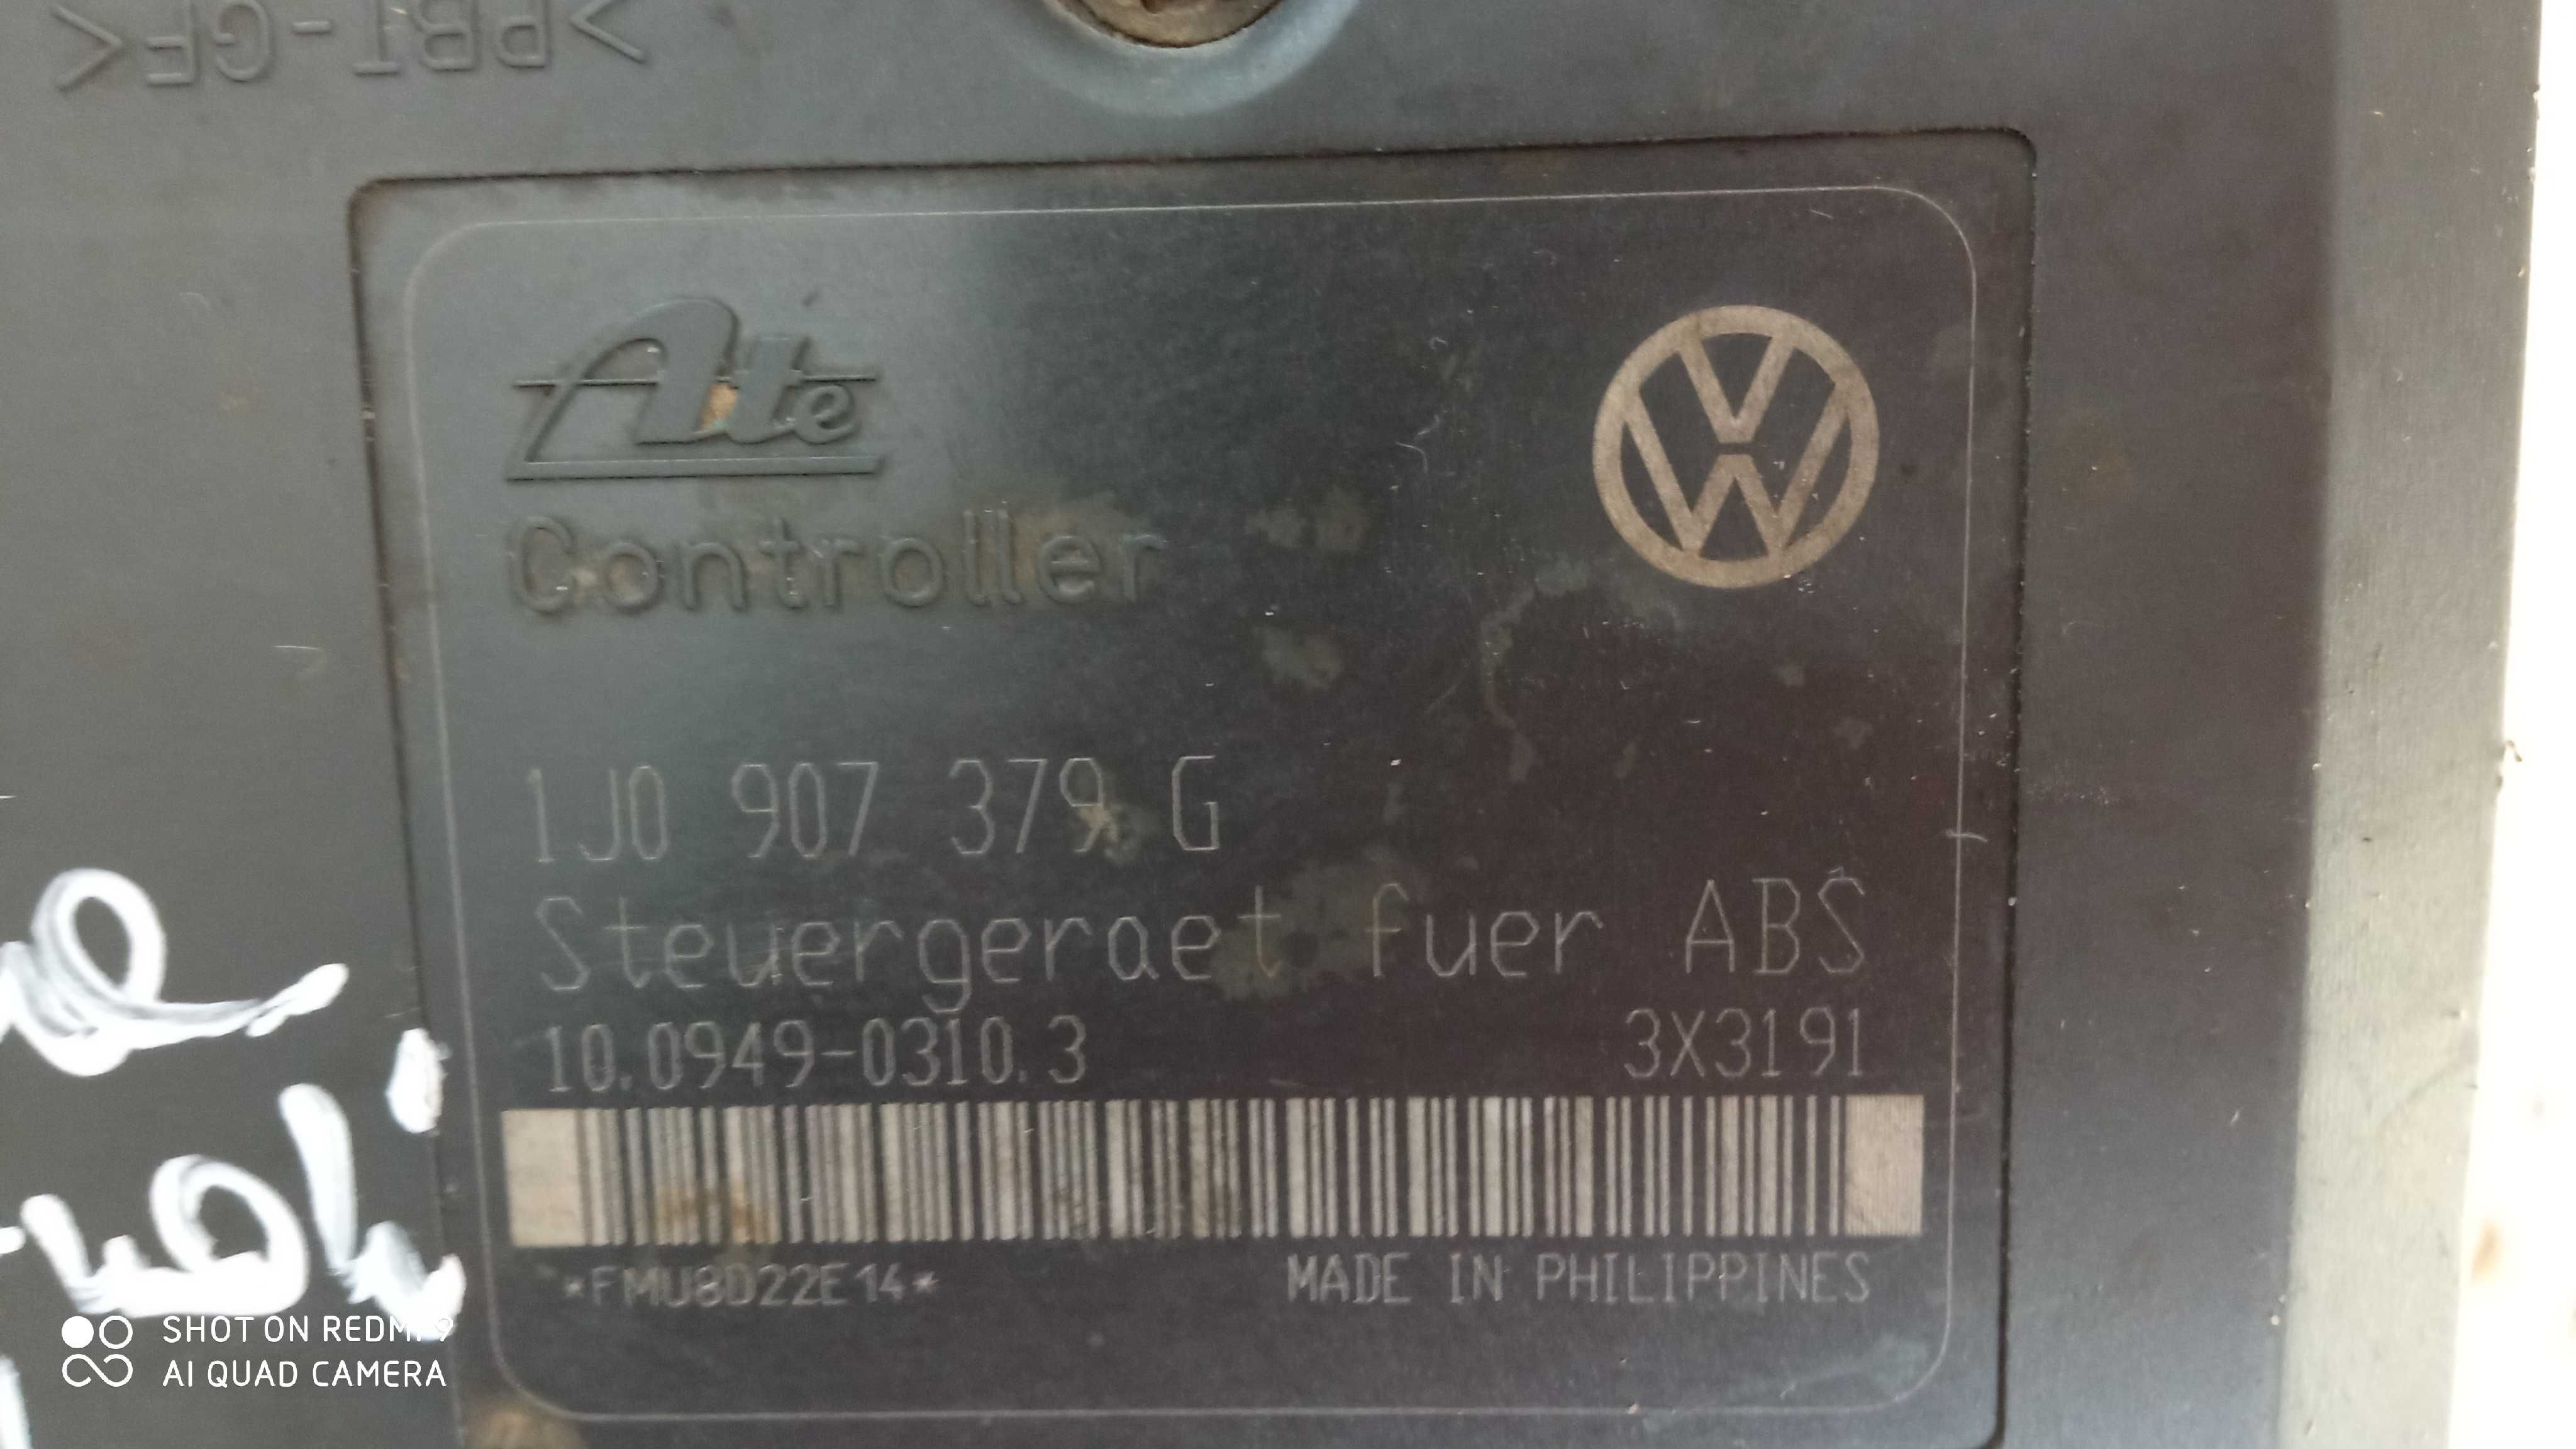 Pompa sterownik ABS hamulcowa Audi VW Skoda Seat 1JO 907 379 G,